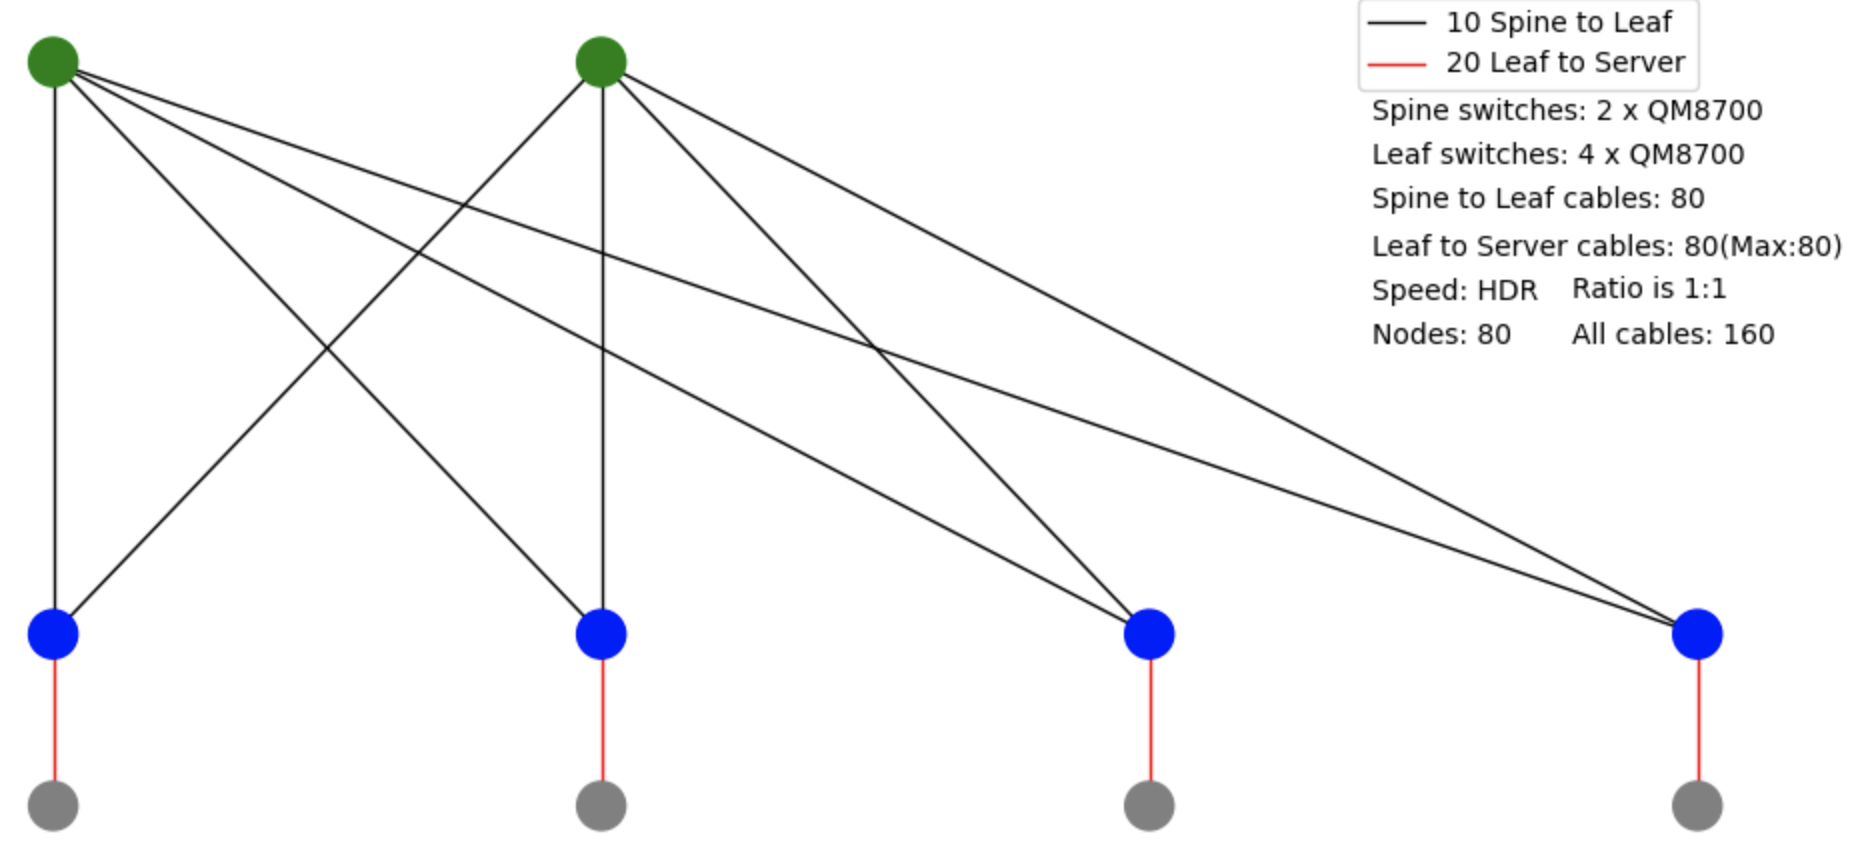 2 Spine + 4 Leaf组成的网络拓扑